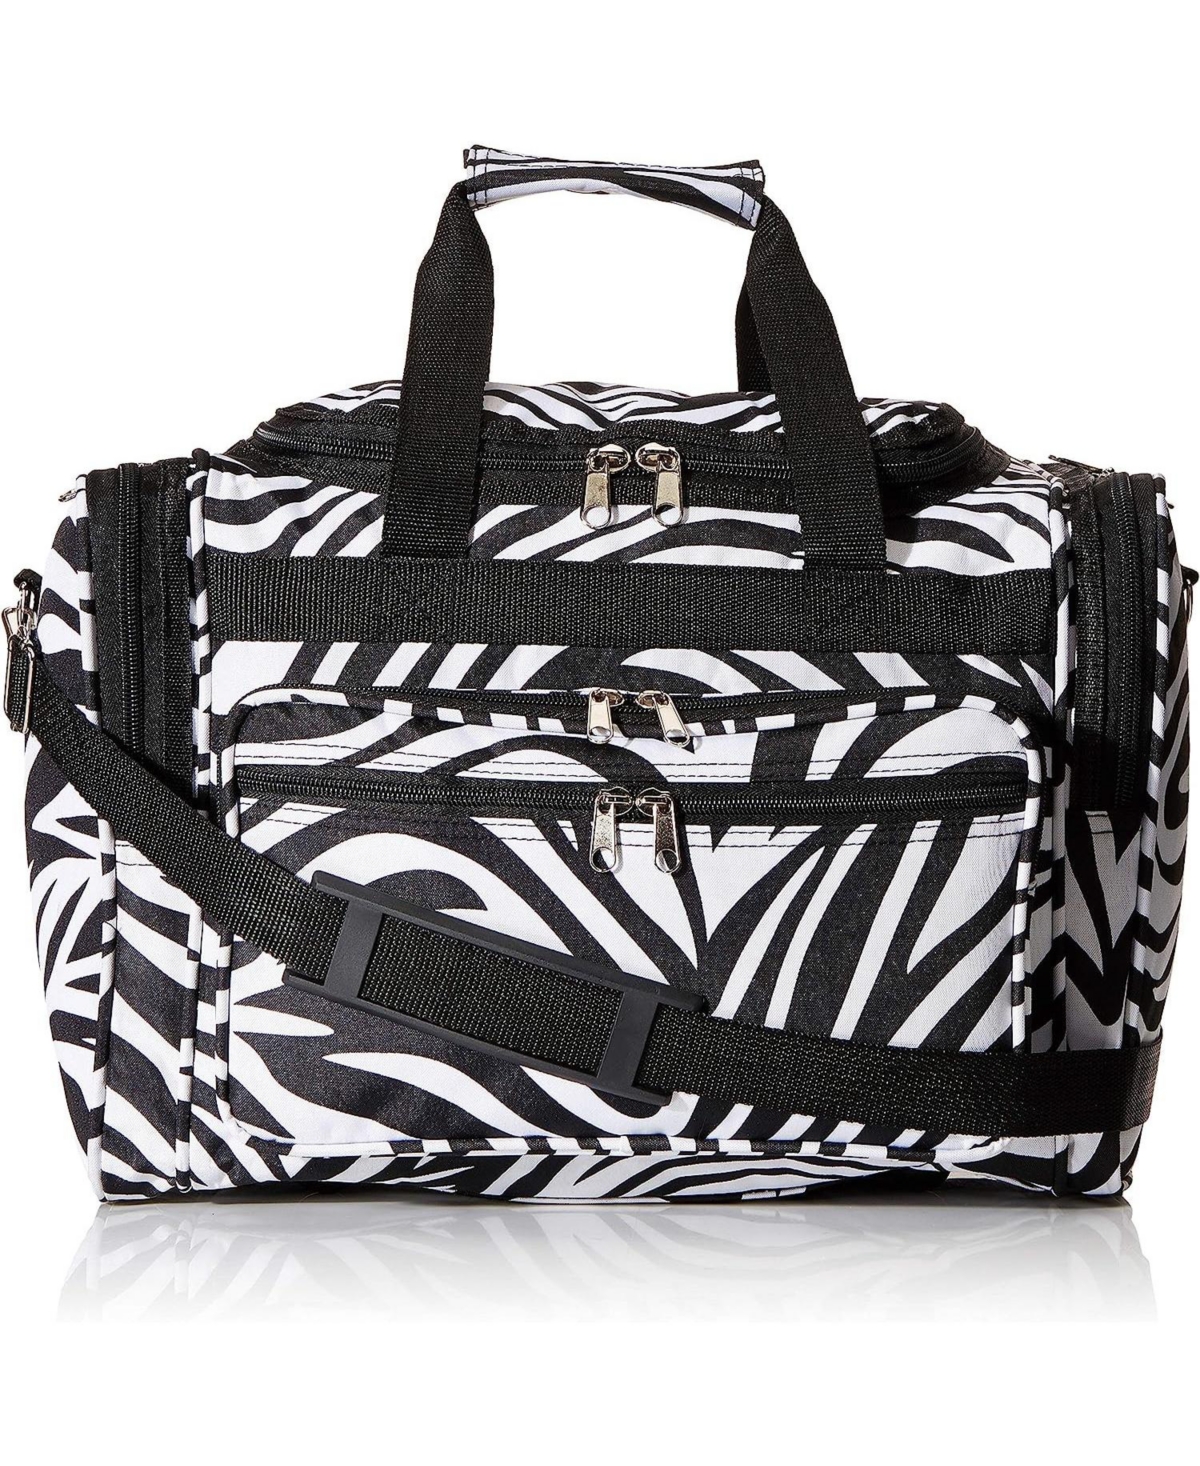 16-Inch Zebra Gym Bag Duffle Bag - Pink trim zebra